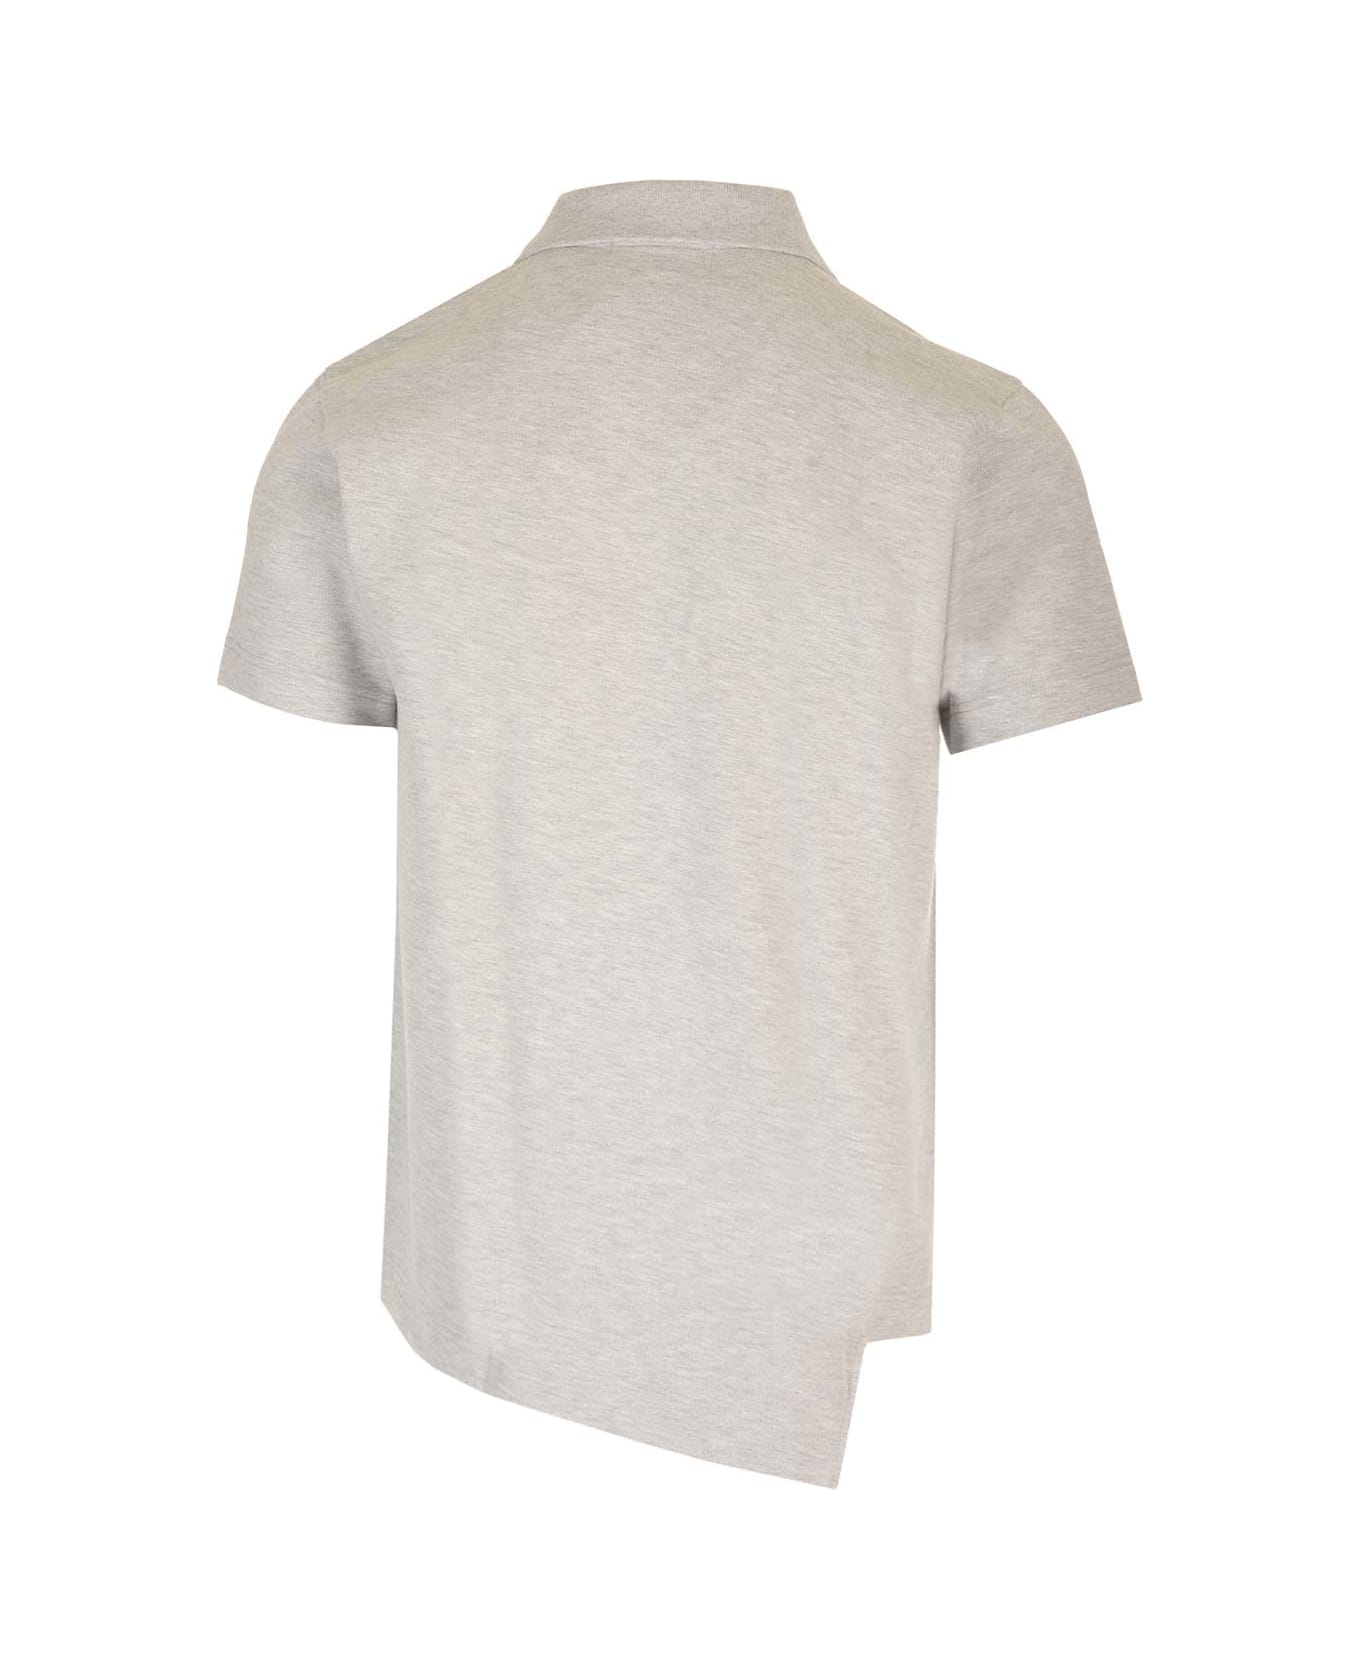 Comme des Garçons Shirt Asymmetric Lacoste Polo Shirt - Top Grey ポロシャツ